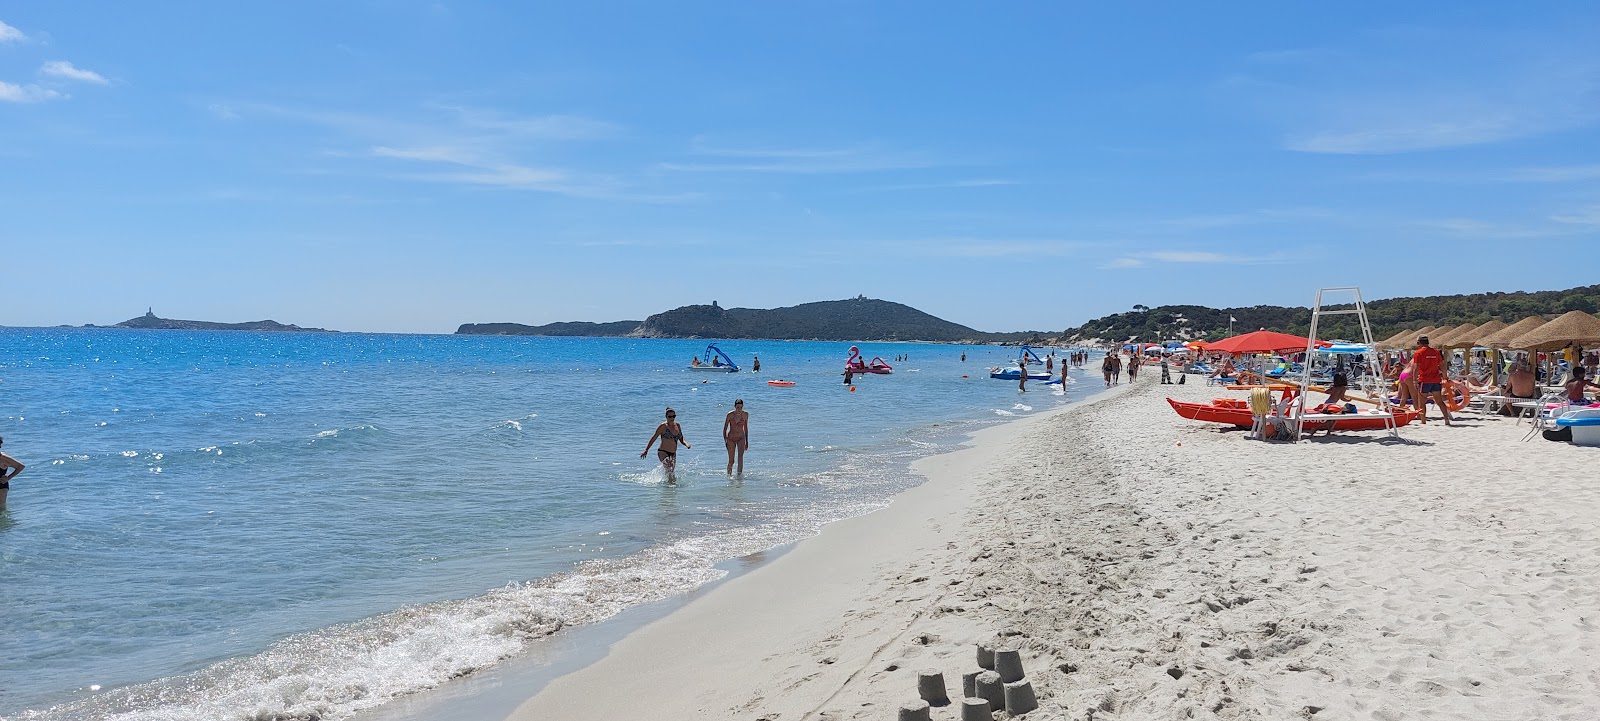 Foto van Spiaggia di Simius met recht en lang